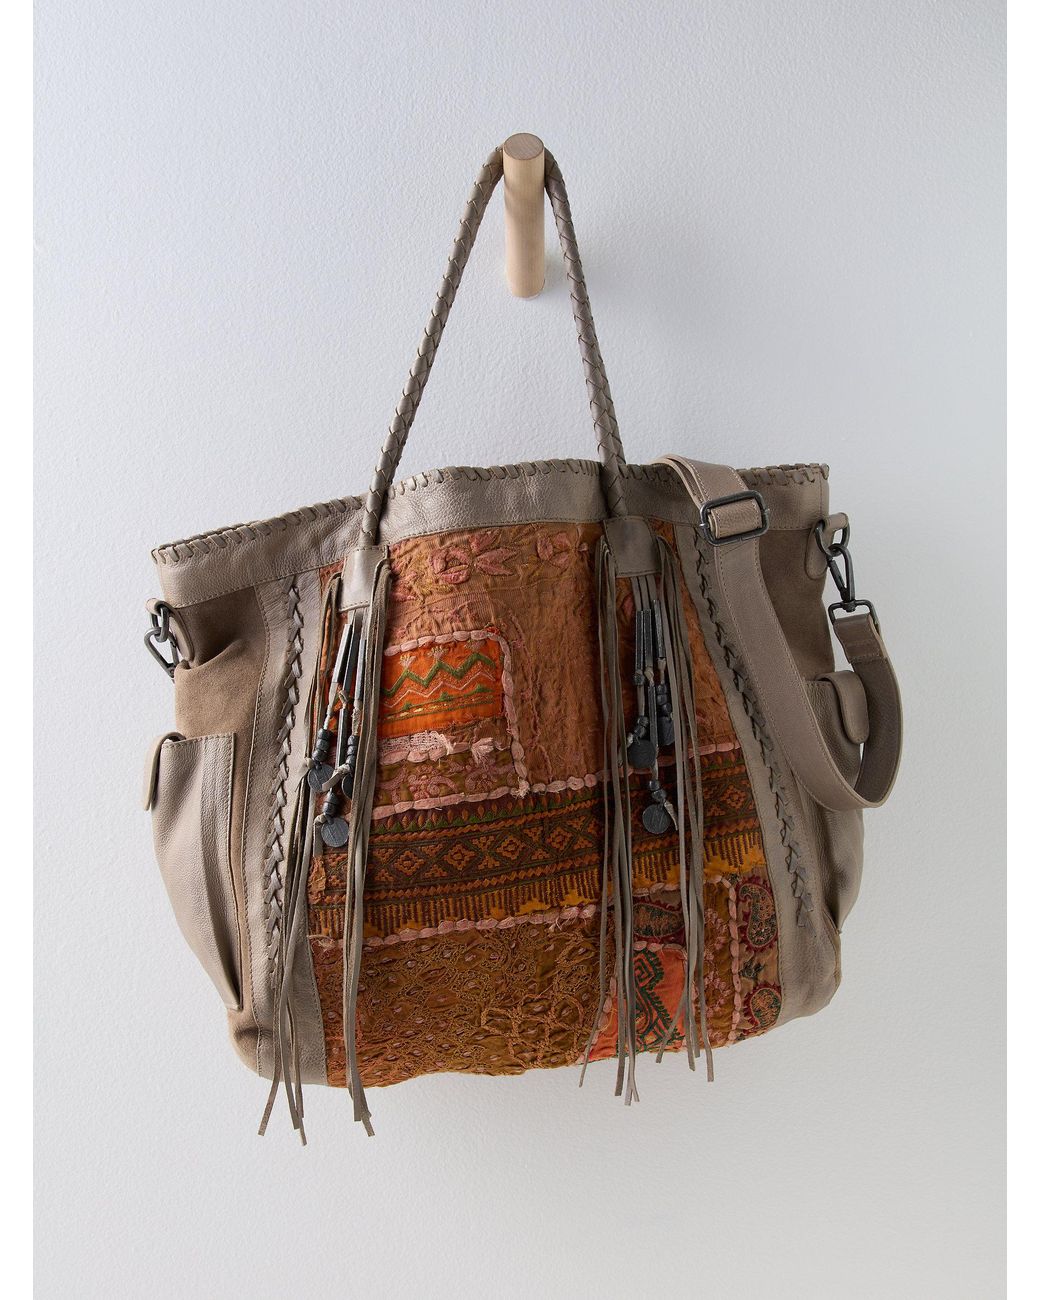 FREE PEOPLE TOTE Hideaway Oversize Canvas Leather Straps Shoulder Bag Purse  | eBay